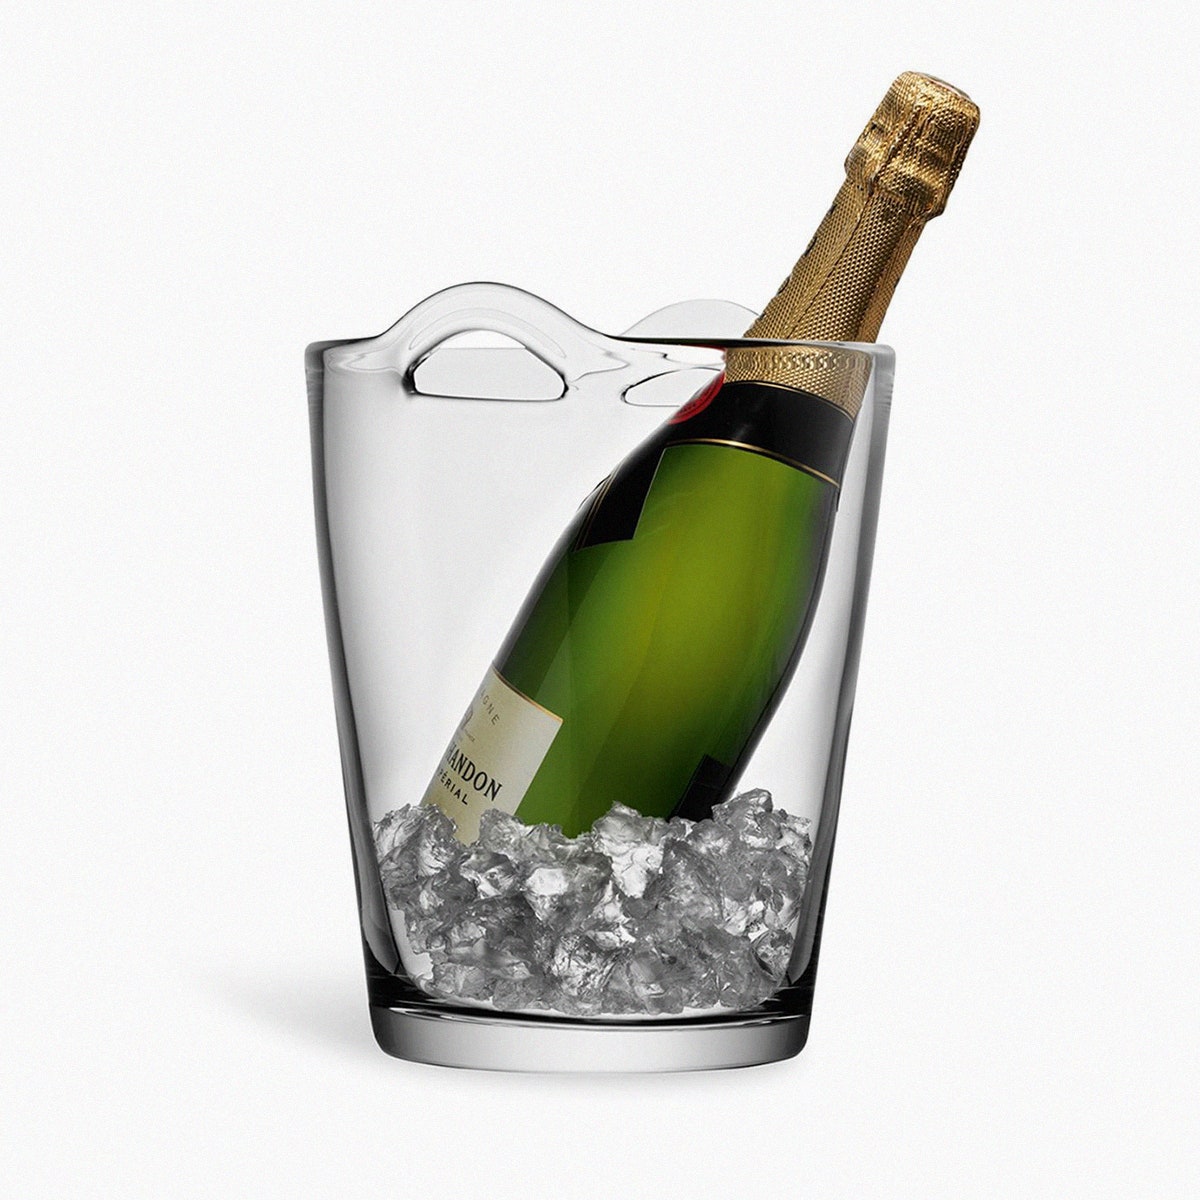 Ведро для шампанского LSA International 8477 рублей farfetch.com